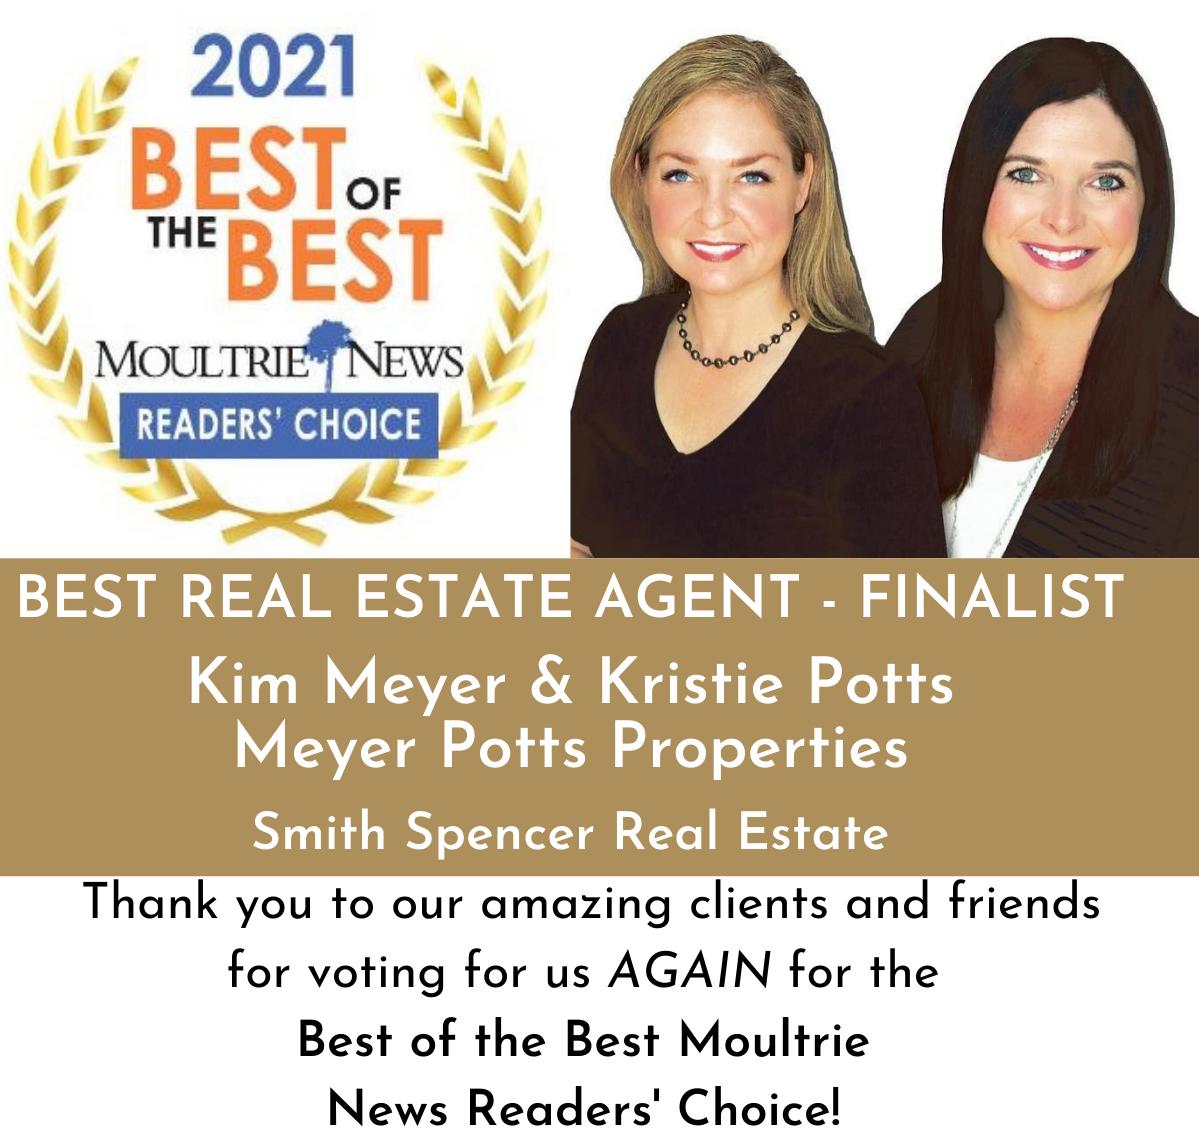 Best of Best Readers Choice 2021 - Meyer Potts Properties Finalist!